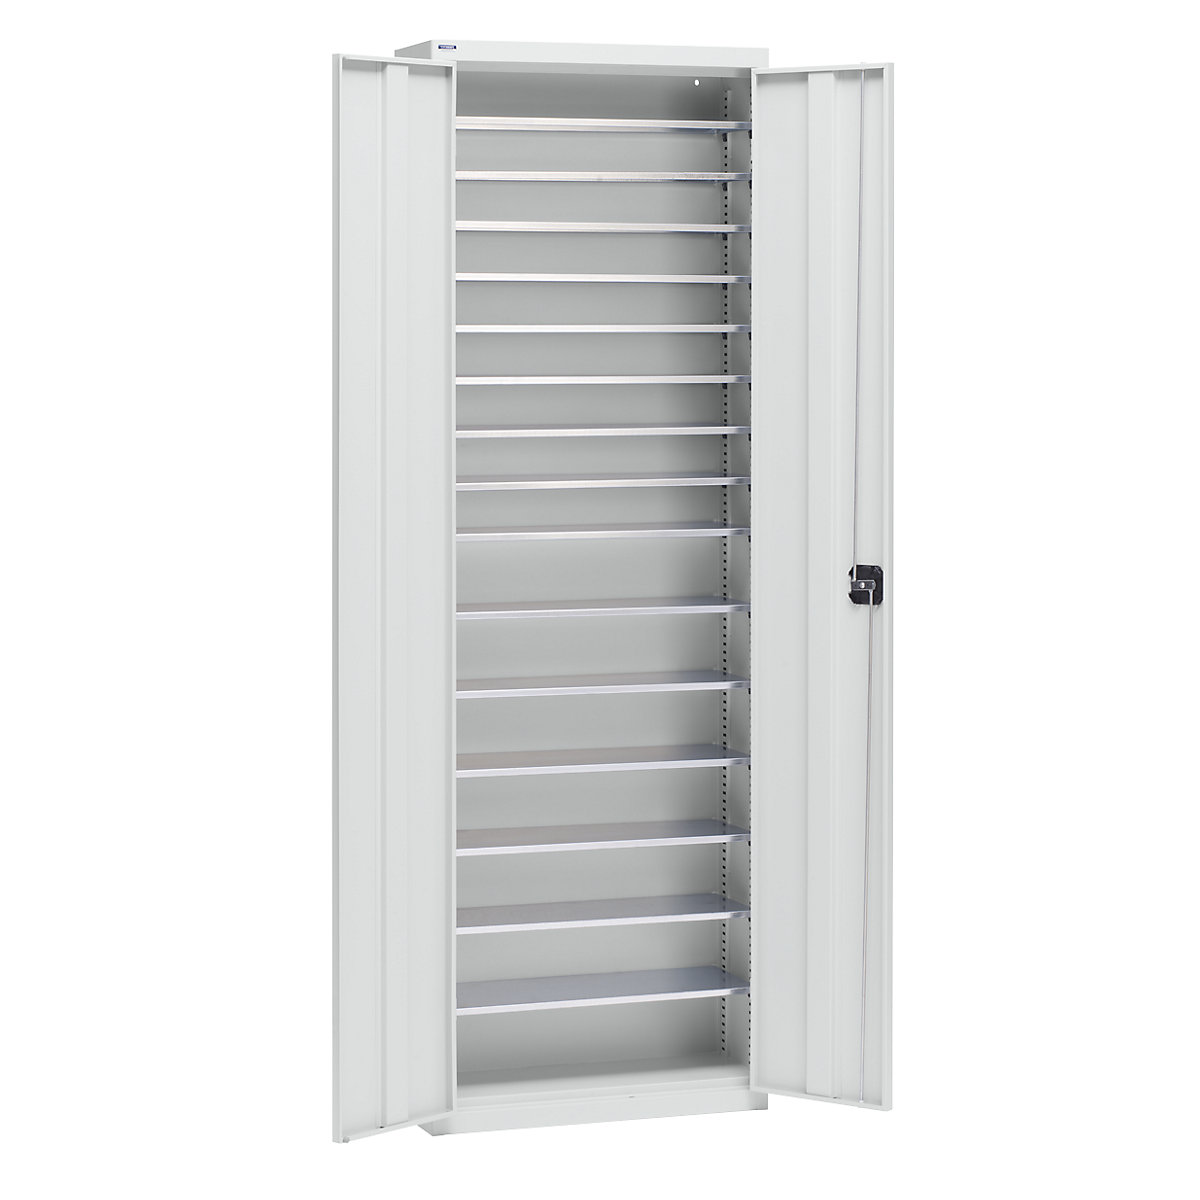 Storage cupboard made of sheet steel – eurokraft pro, height 2000 mm, light grey RAL 7035, 15 shelves-6